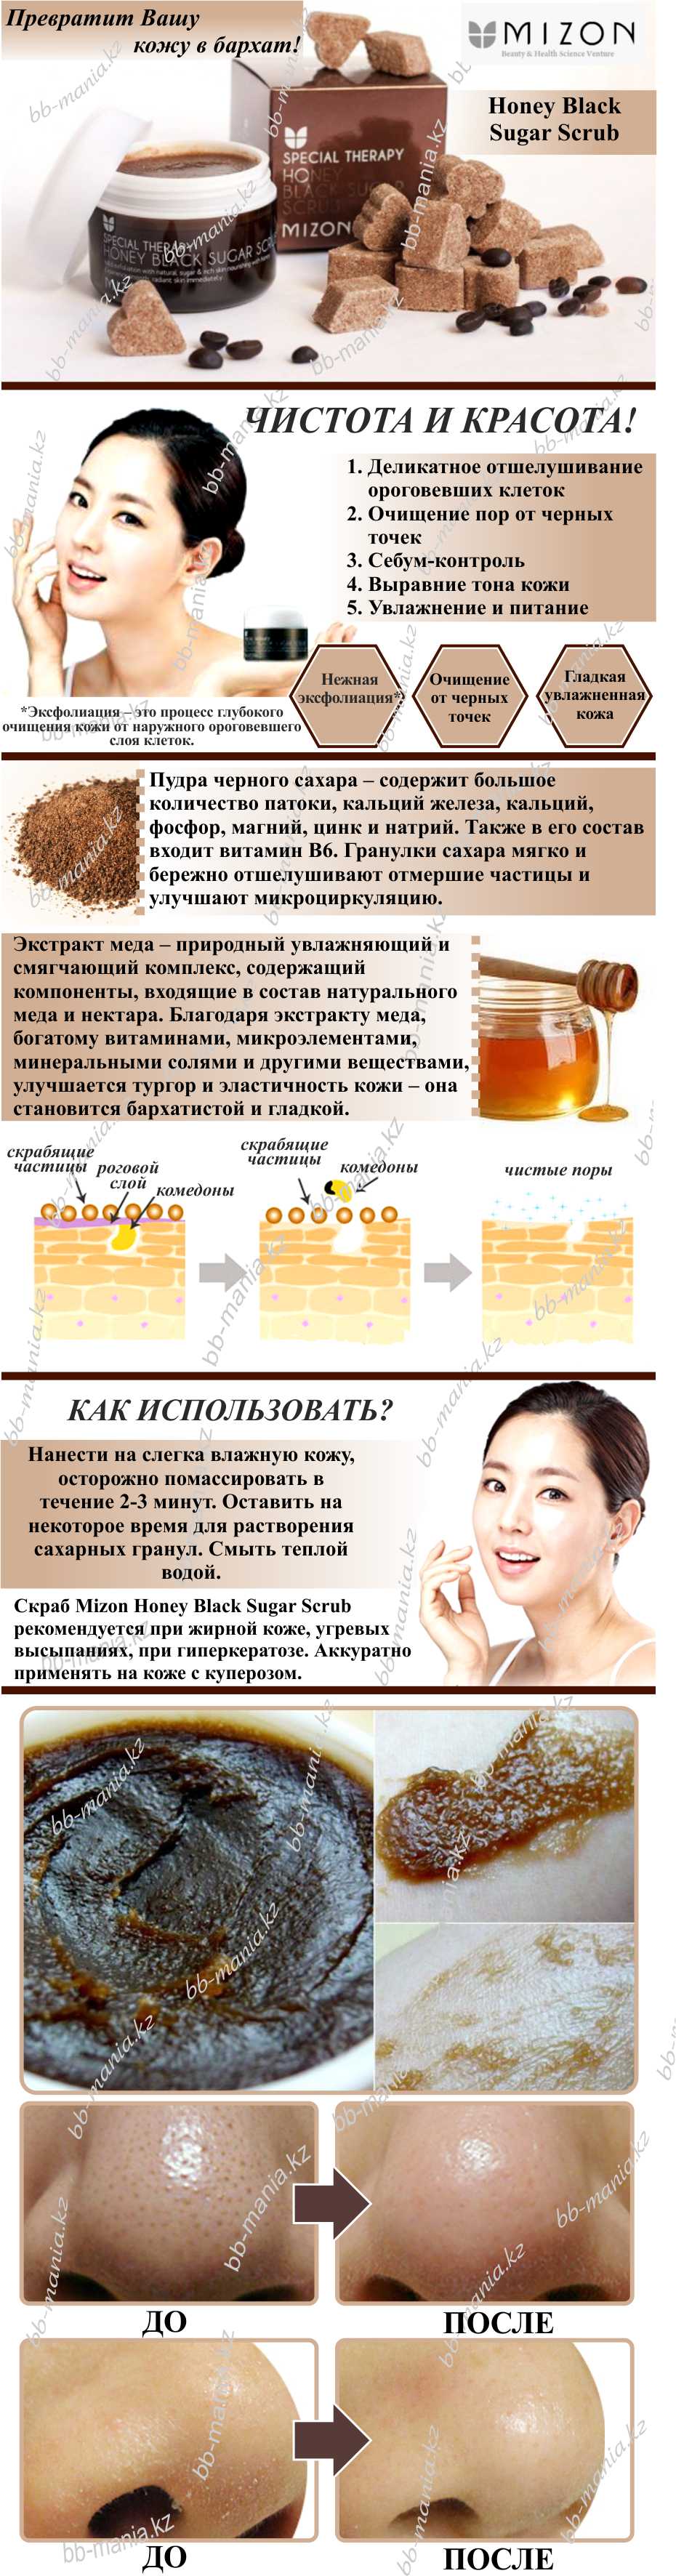 Honey Black Sugar Scrub [Mizon] основная-min